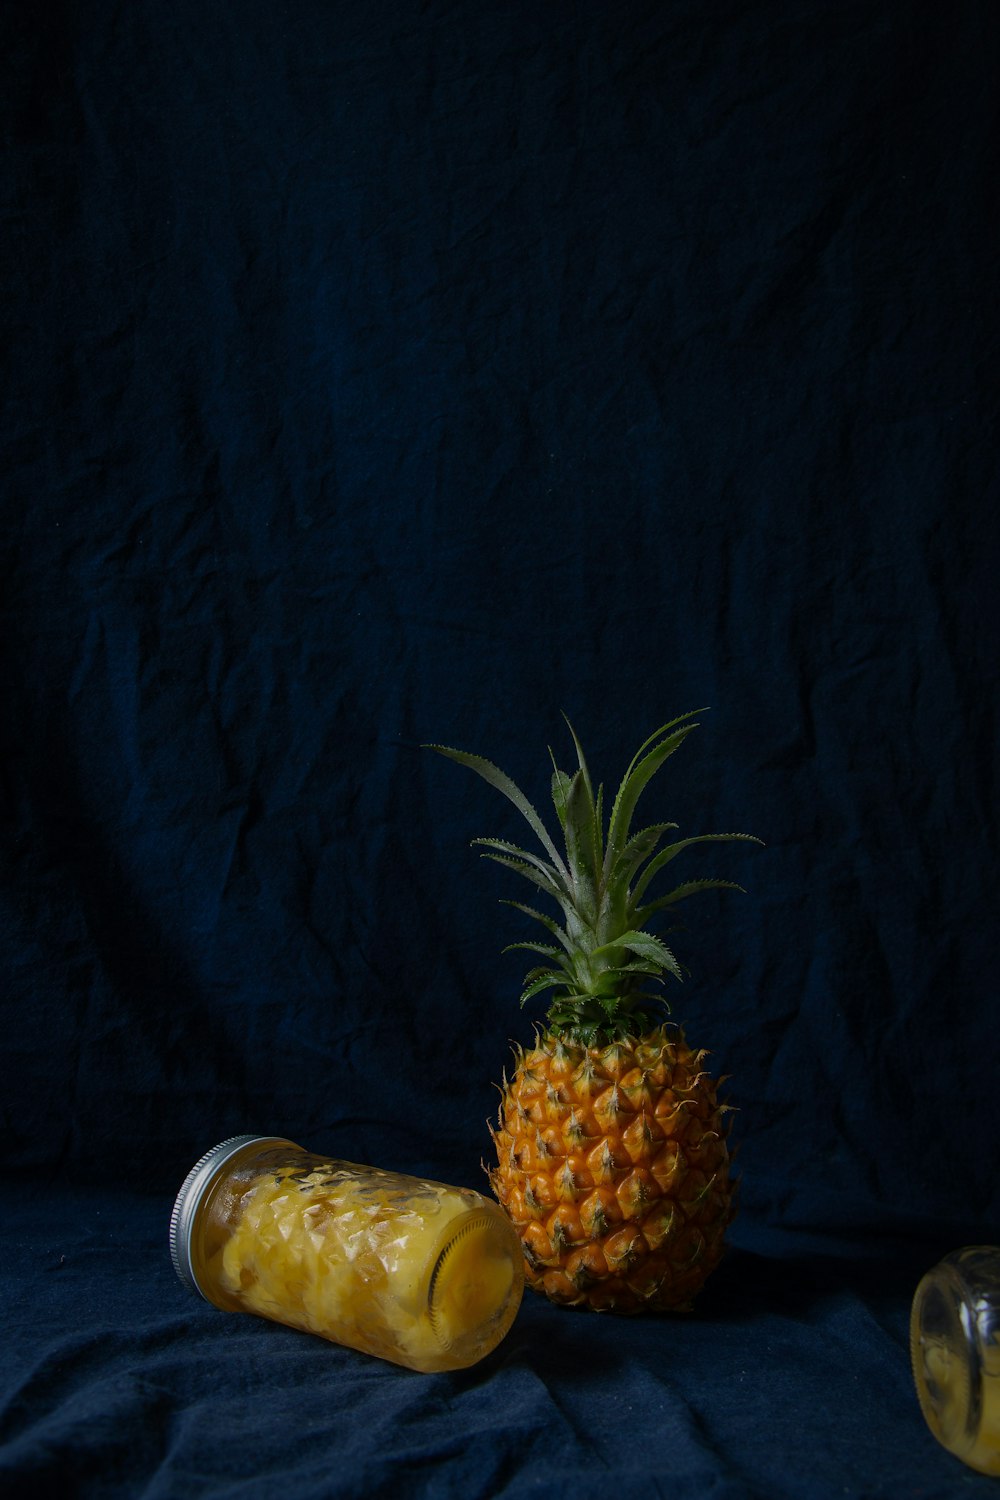 pineapple fruits near glass jars